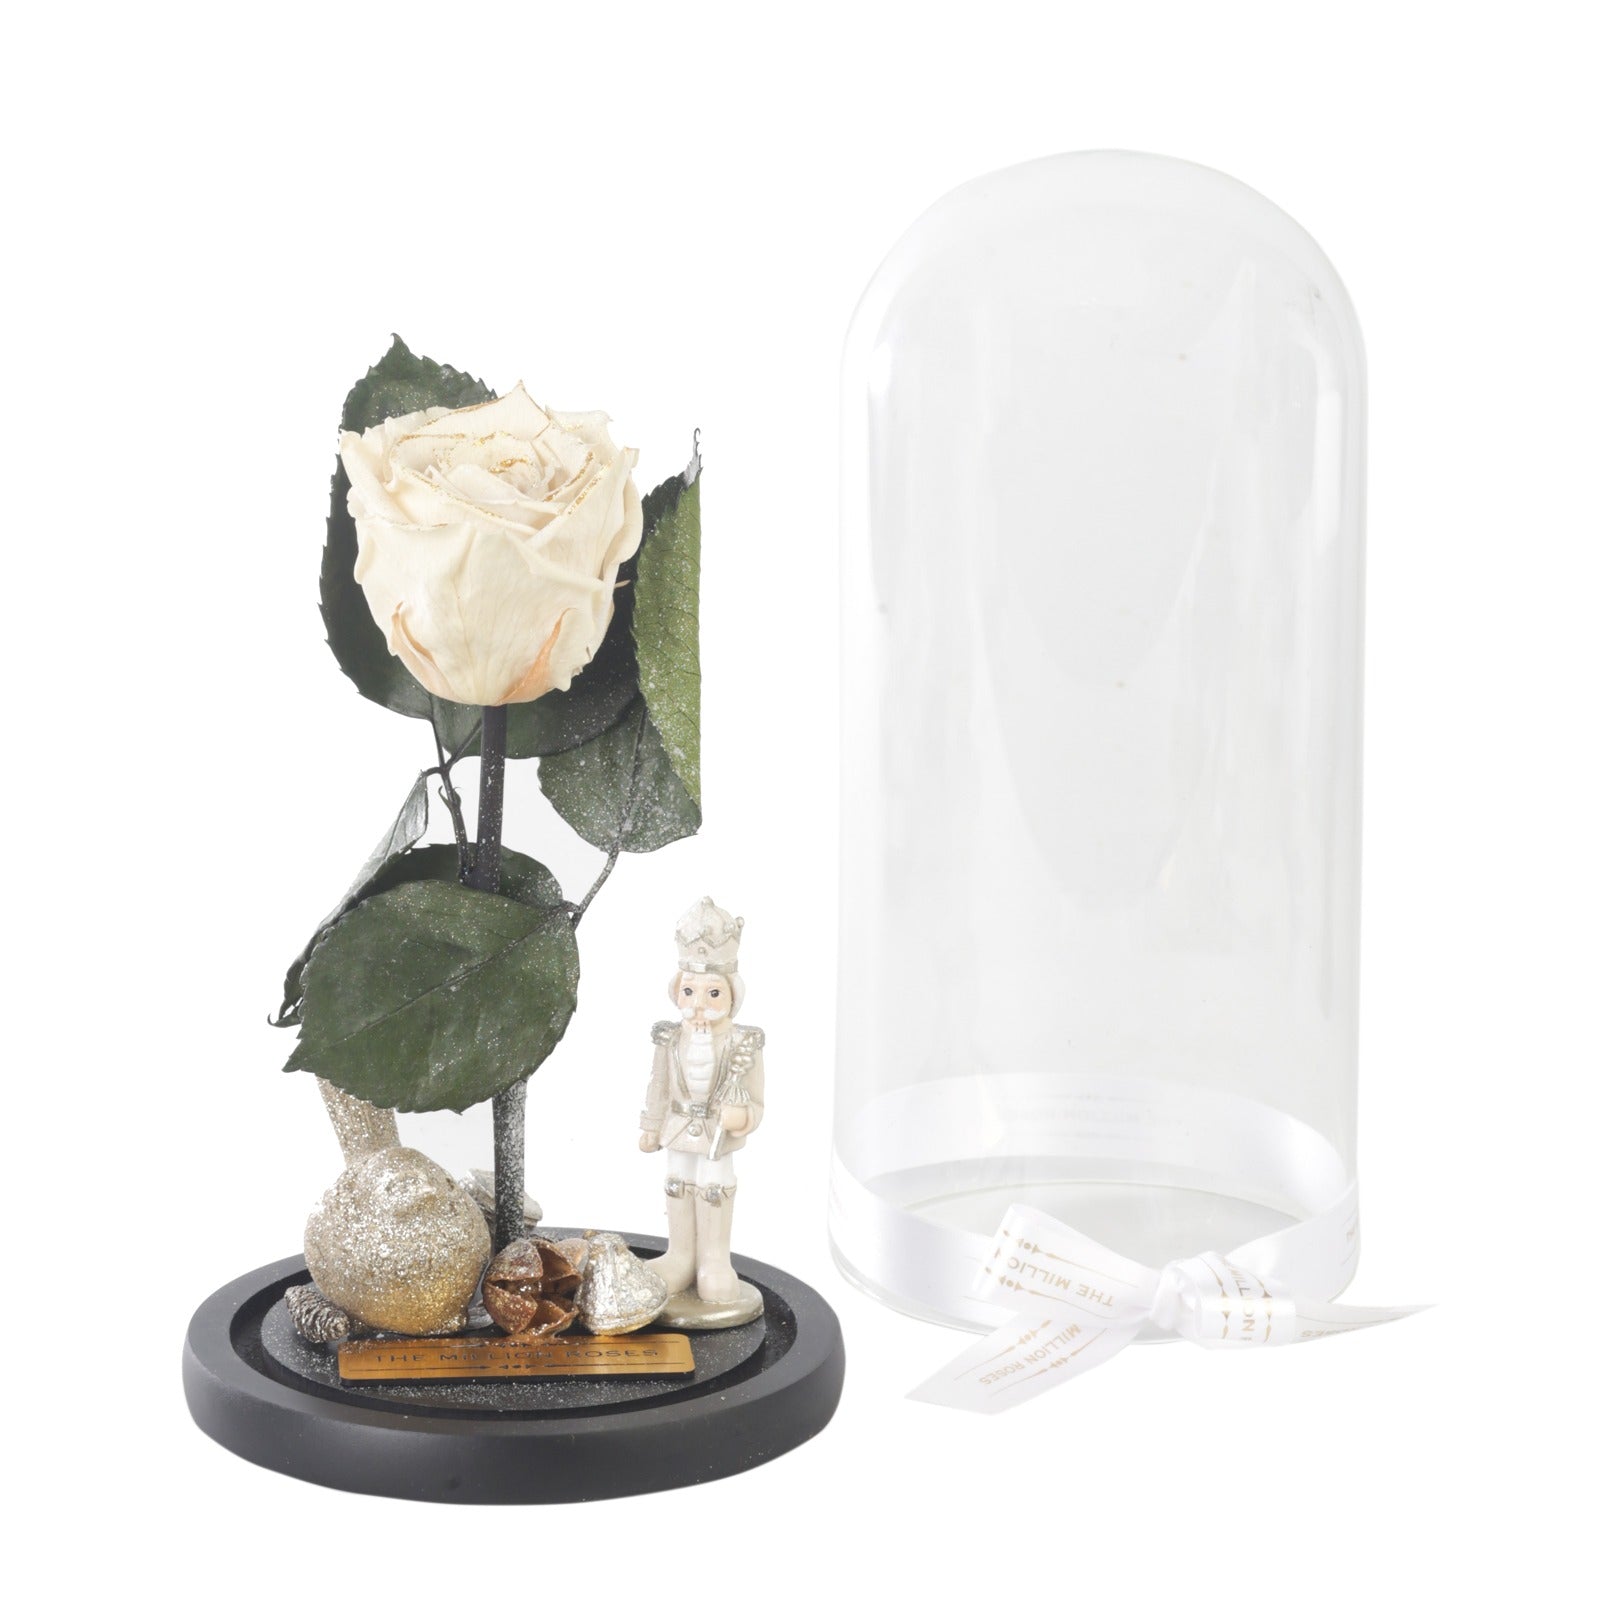 Trandafir criogenat alb in cupola de sticla-Editie de Craciun